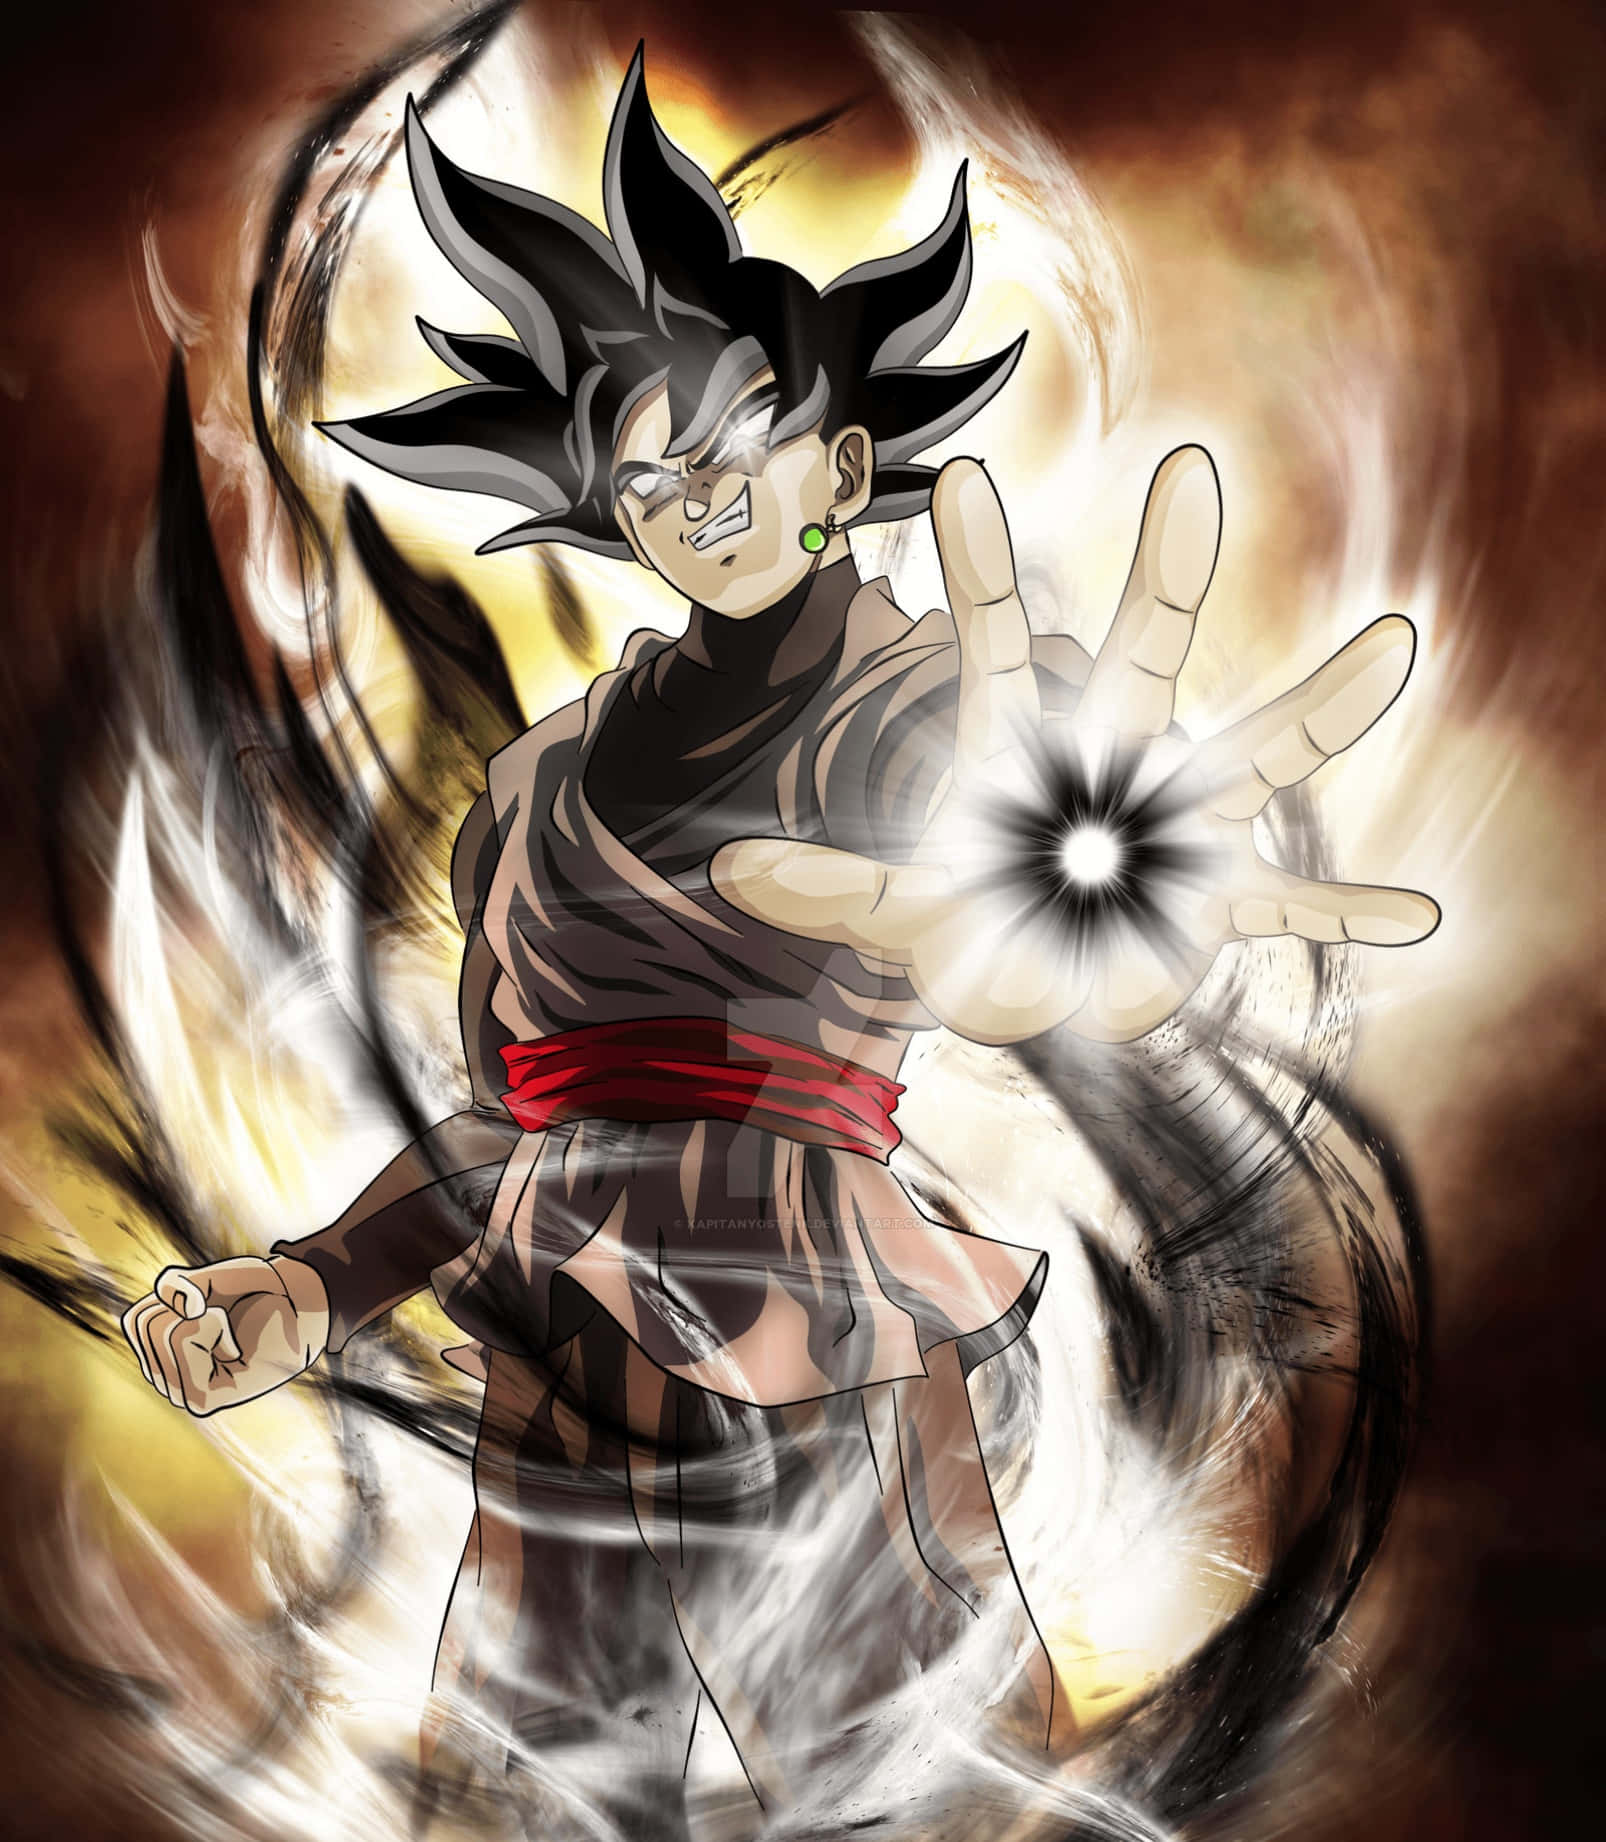 Goku Black, the Super Saiyan God from Dragon Ball Super